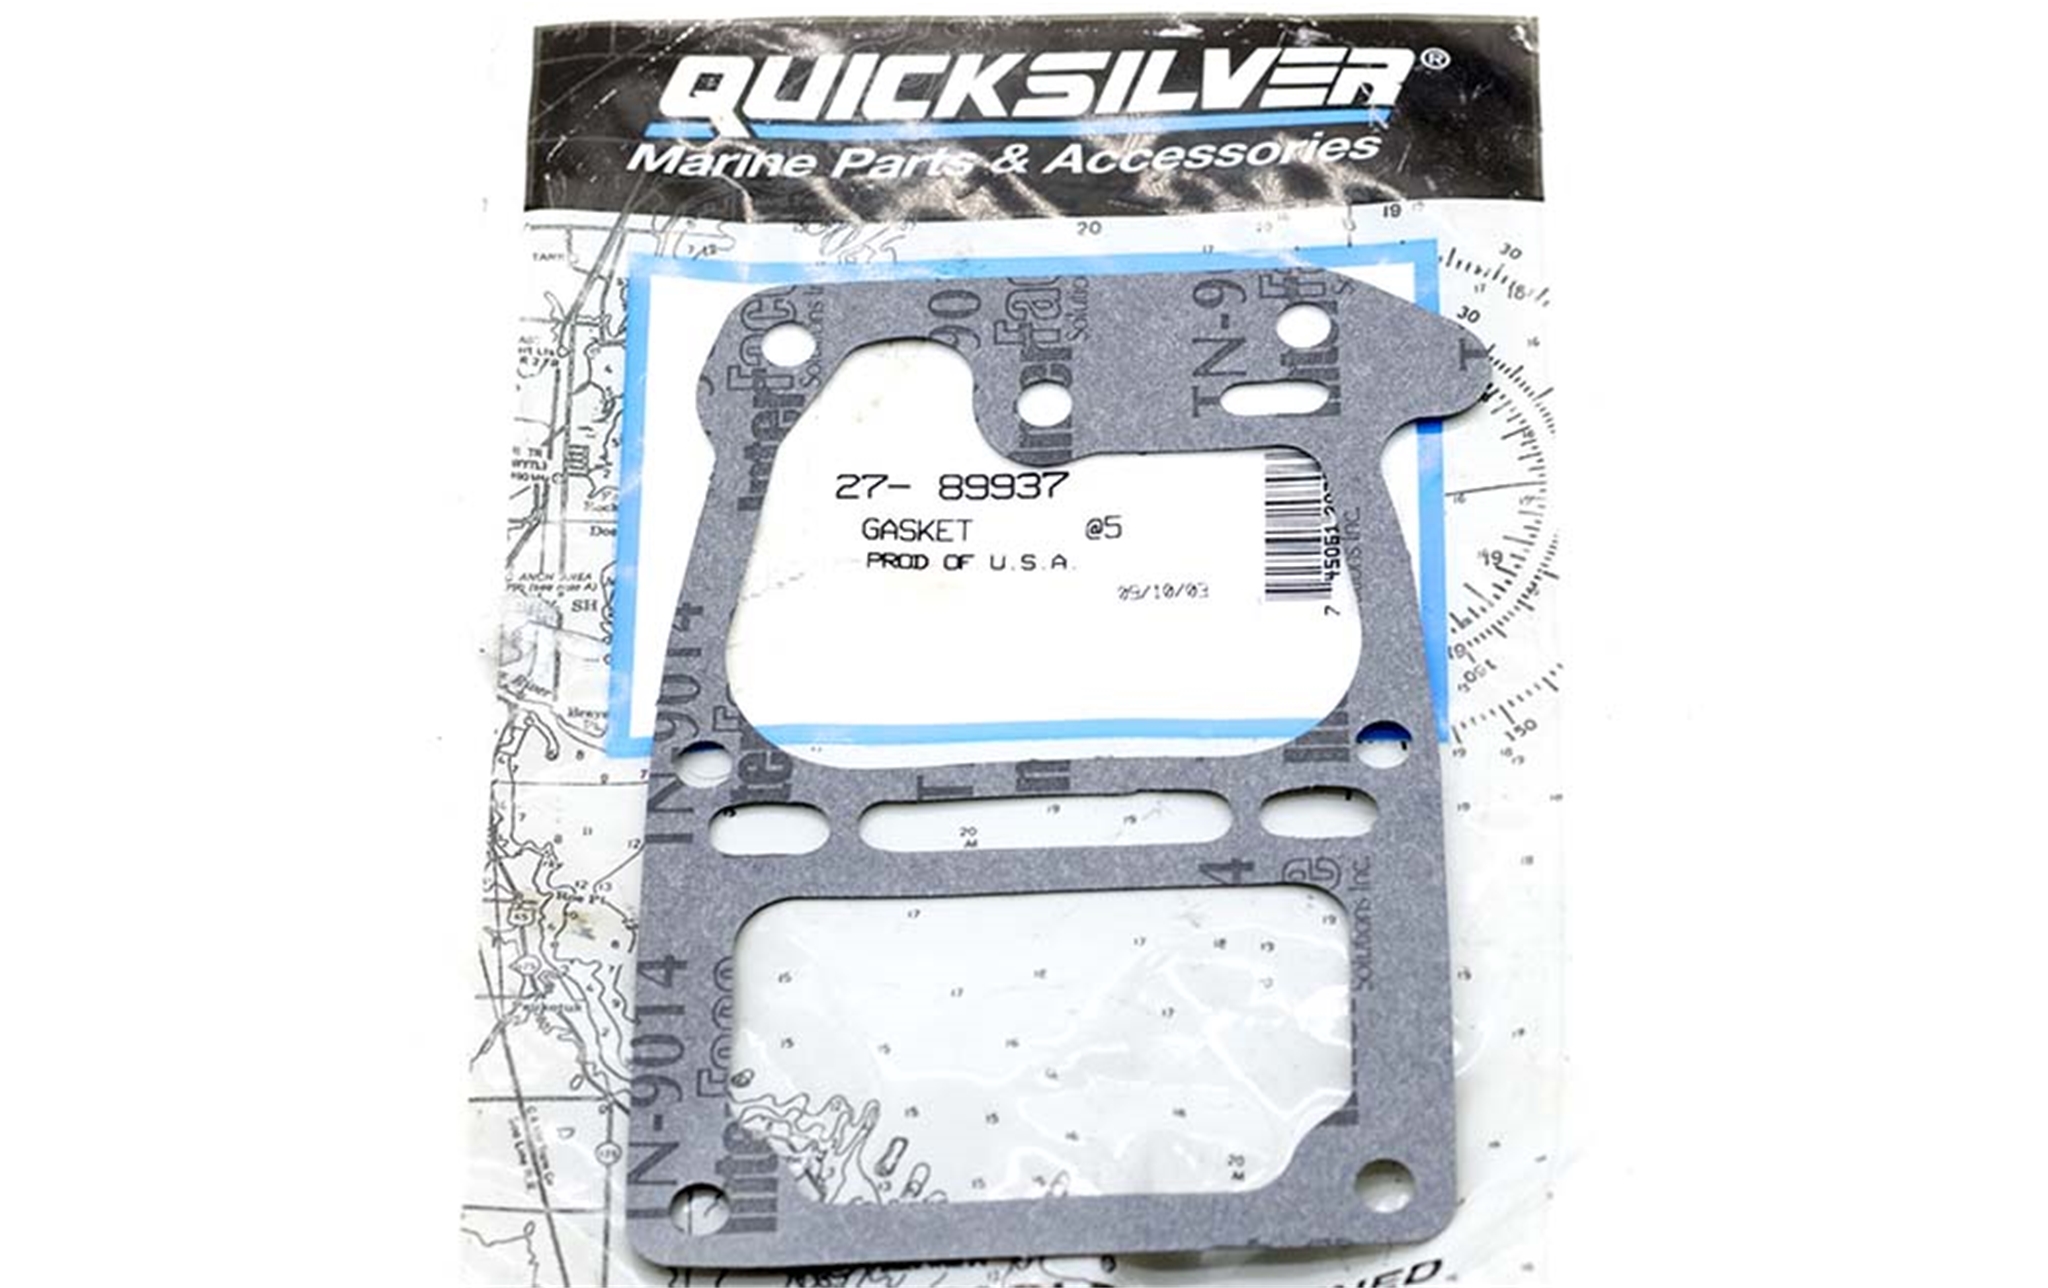 27-89937 Quicksilver Powerhead Adapter Plate Gasket